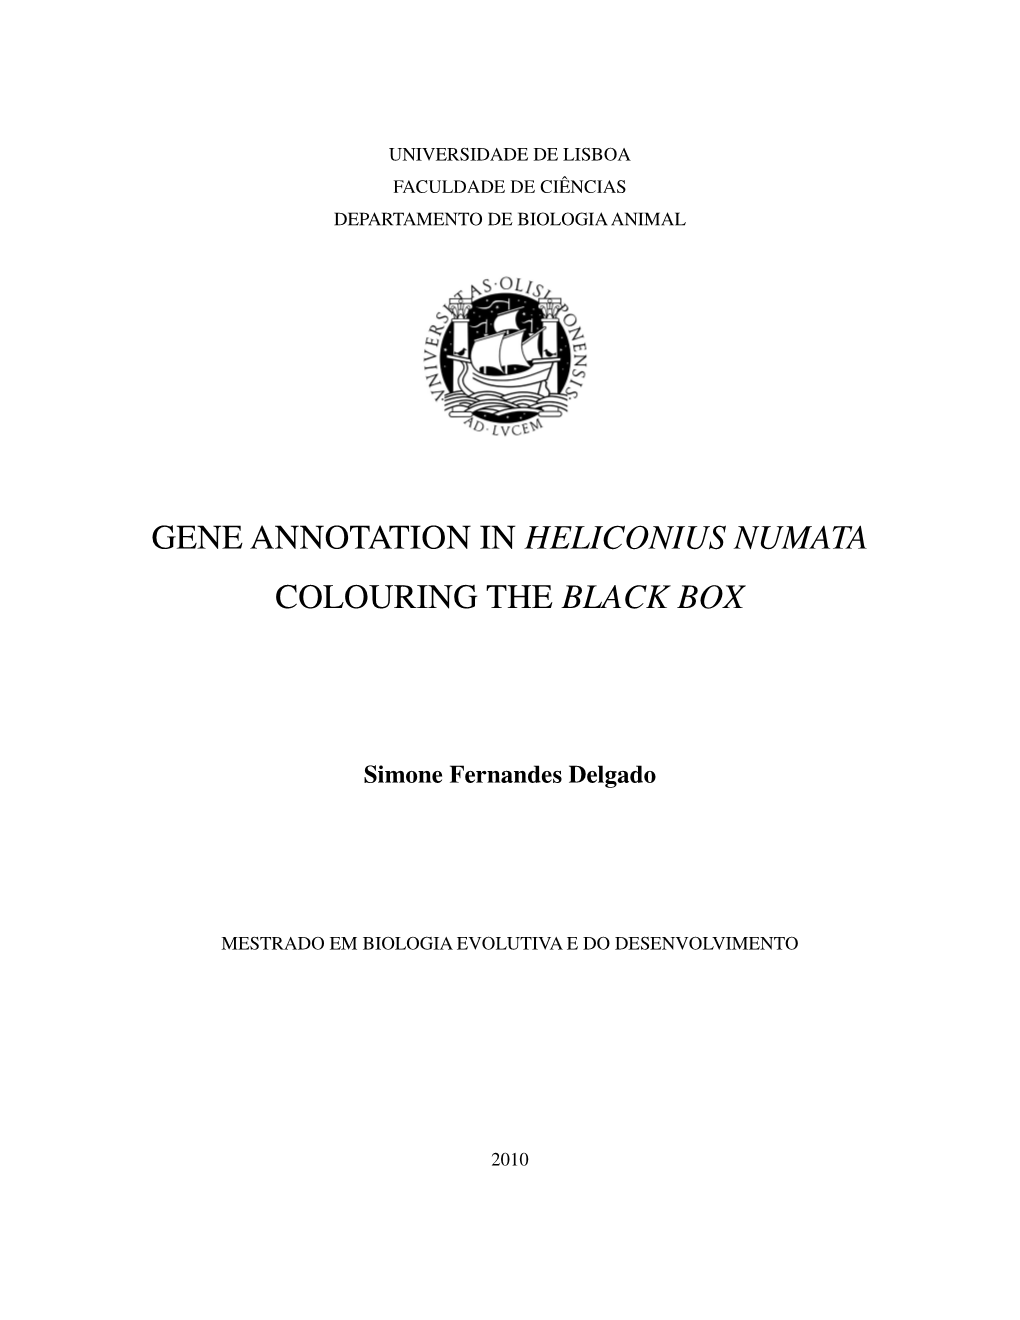 Gene Annotation in Heliconius Numata Colouring the Black Box